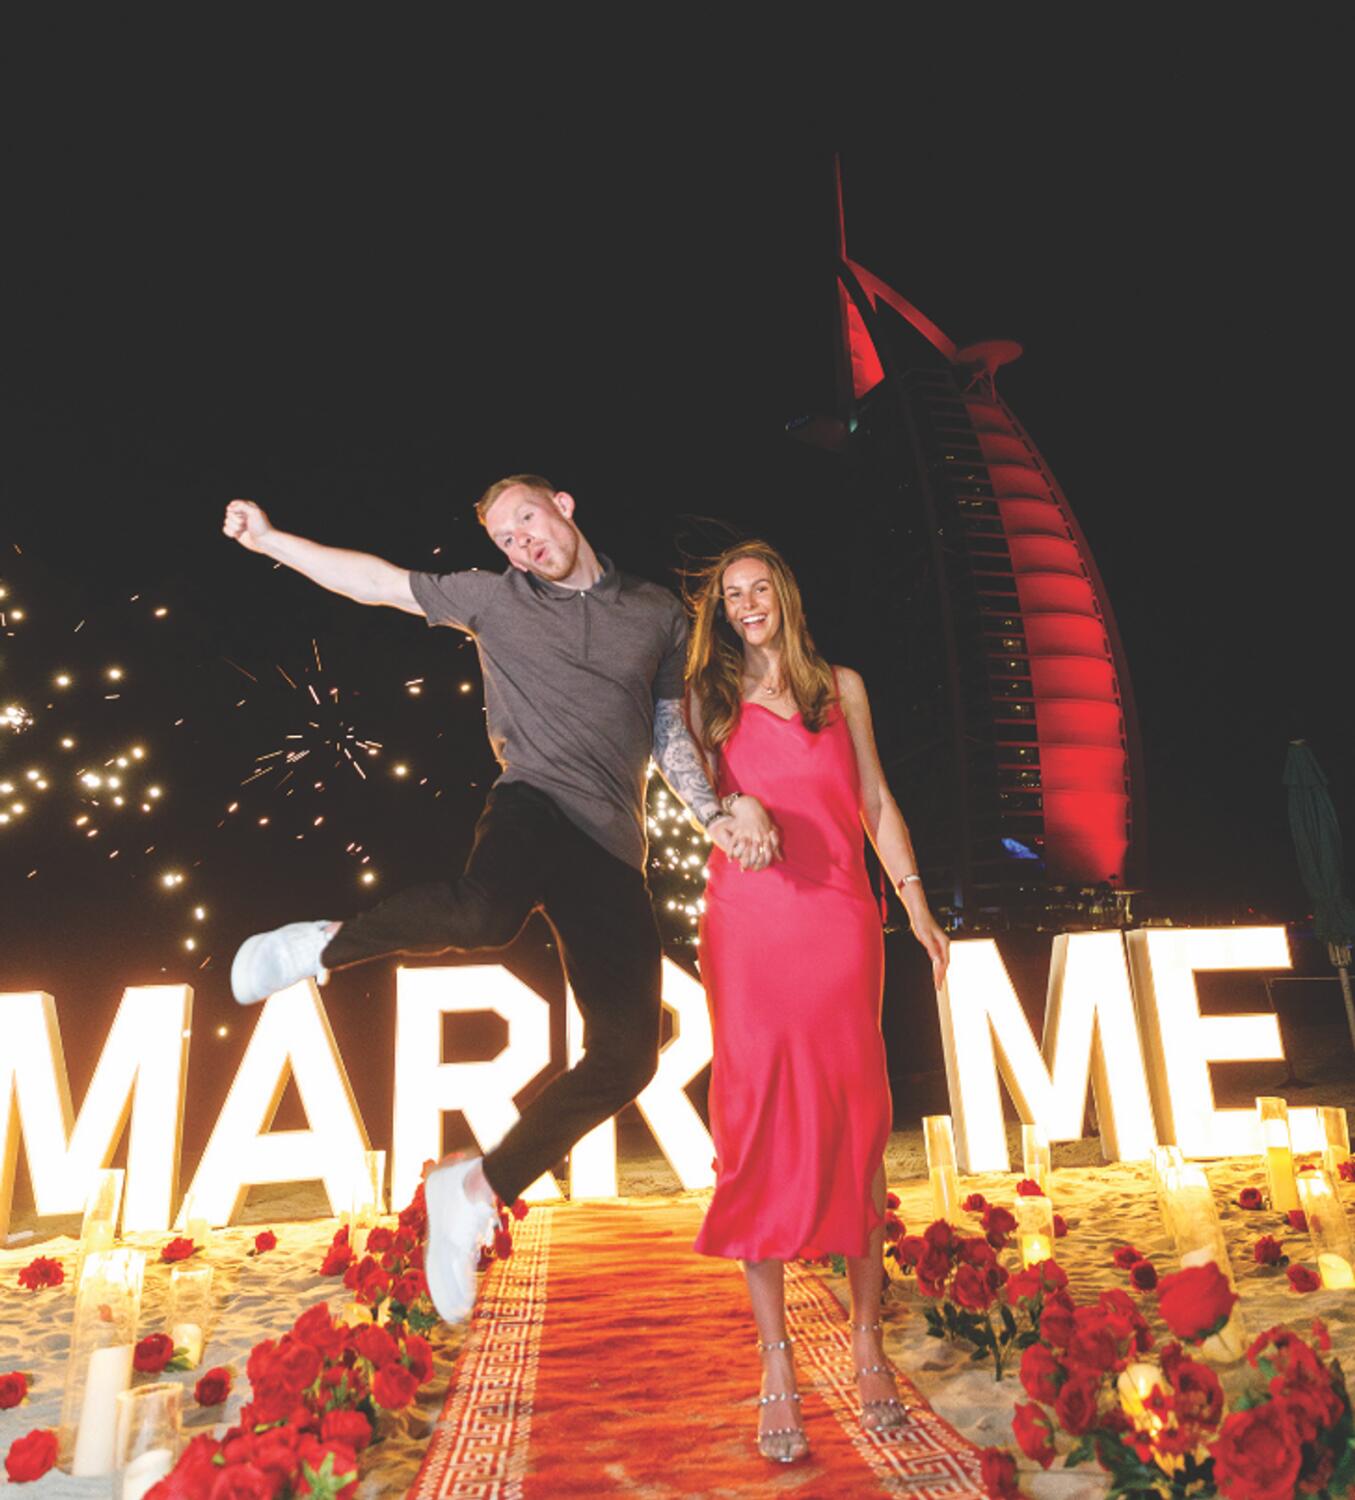 English footballer Lewis O’Brien’s lavish proposal to his partner Robyn Hartley on a private Dubai beach